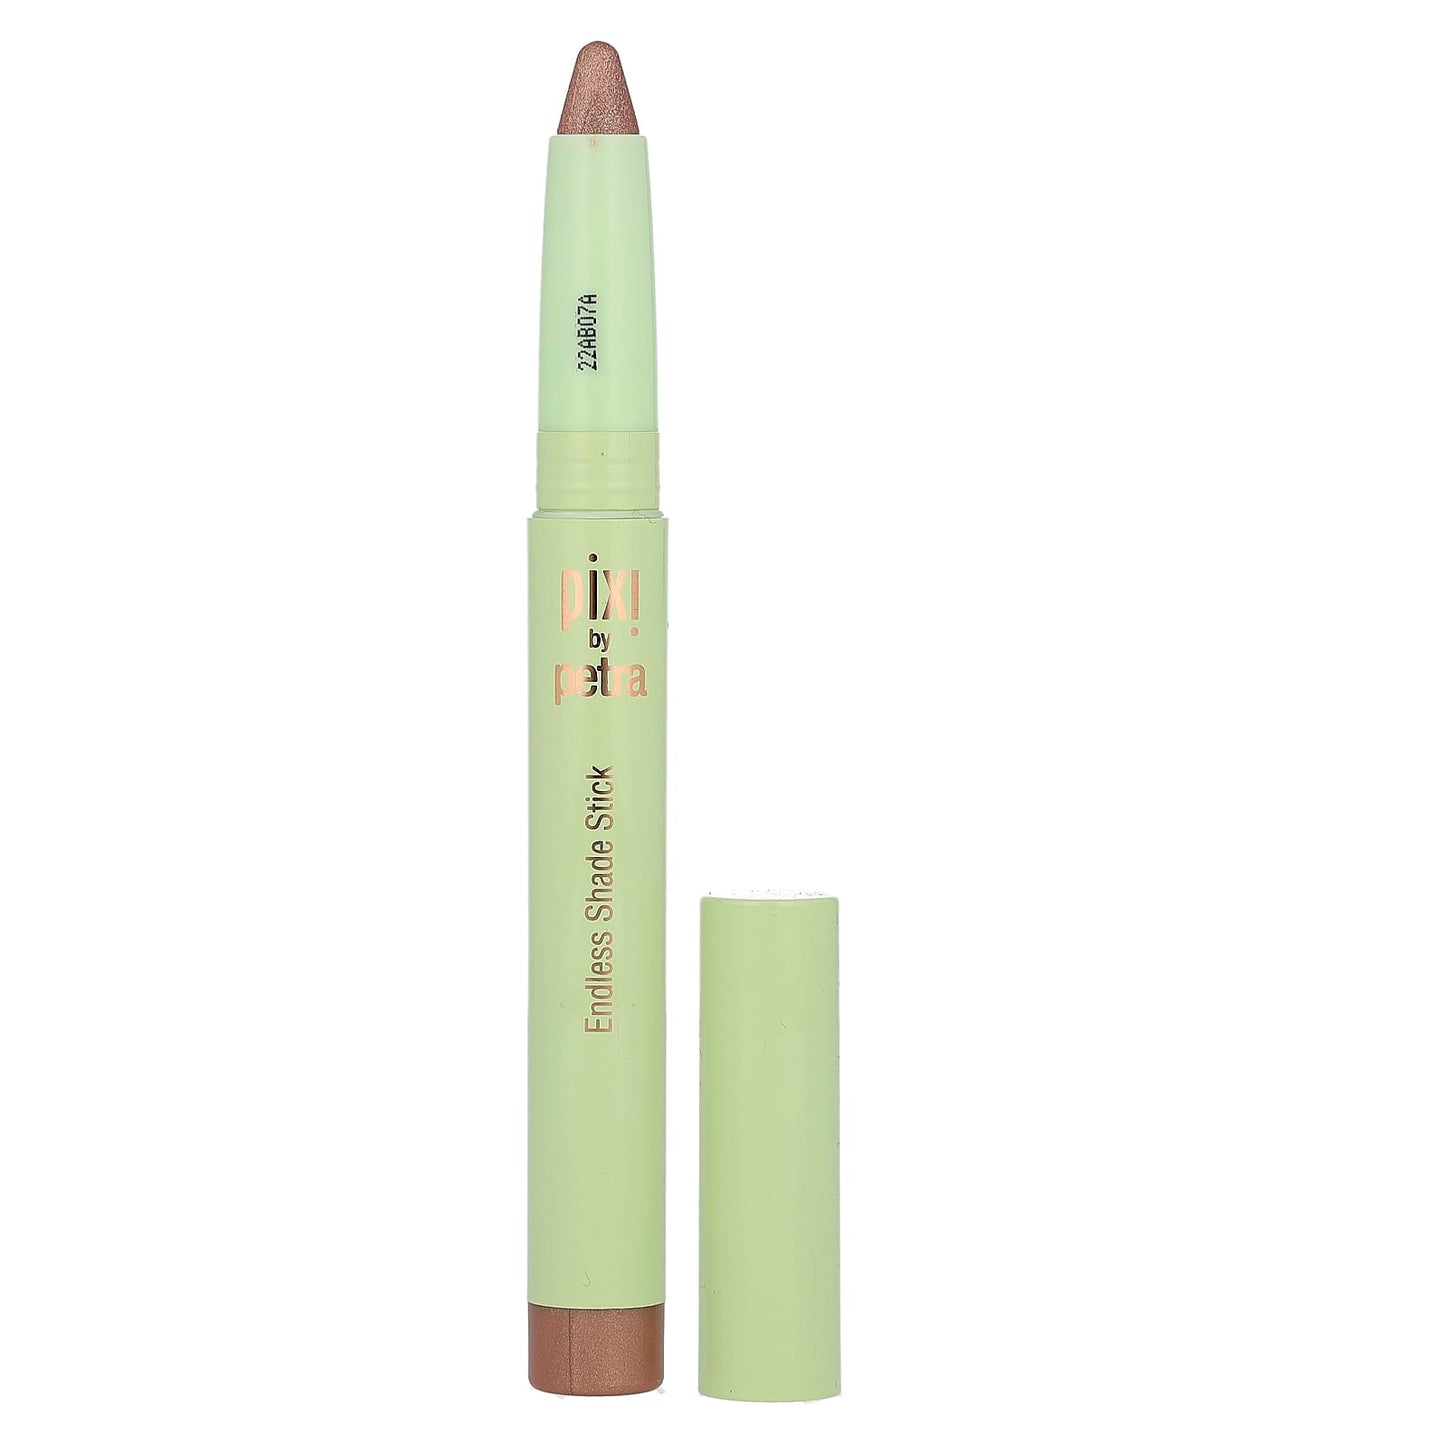 Pixi Beauty-Endless Shade Stick-Eyeshadow Stick-0228 CopperGlaze-0.05 oz (1.5 g)